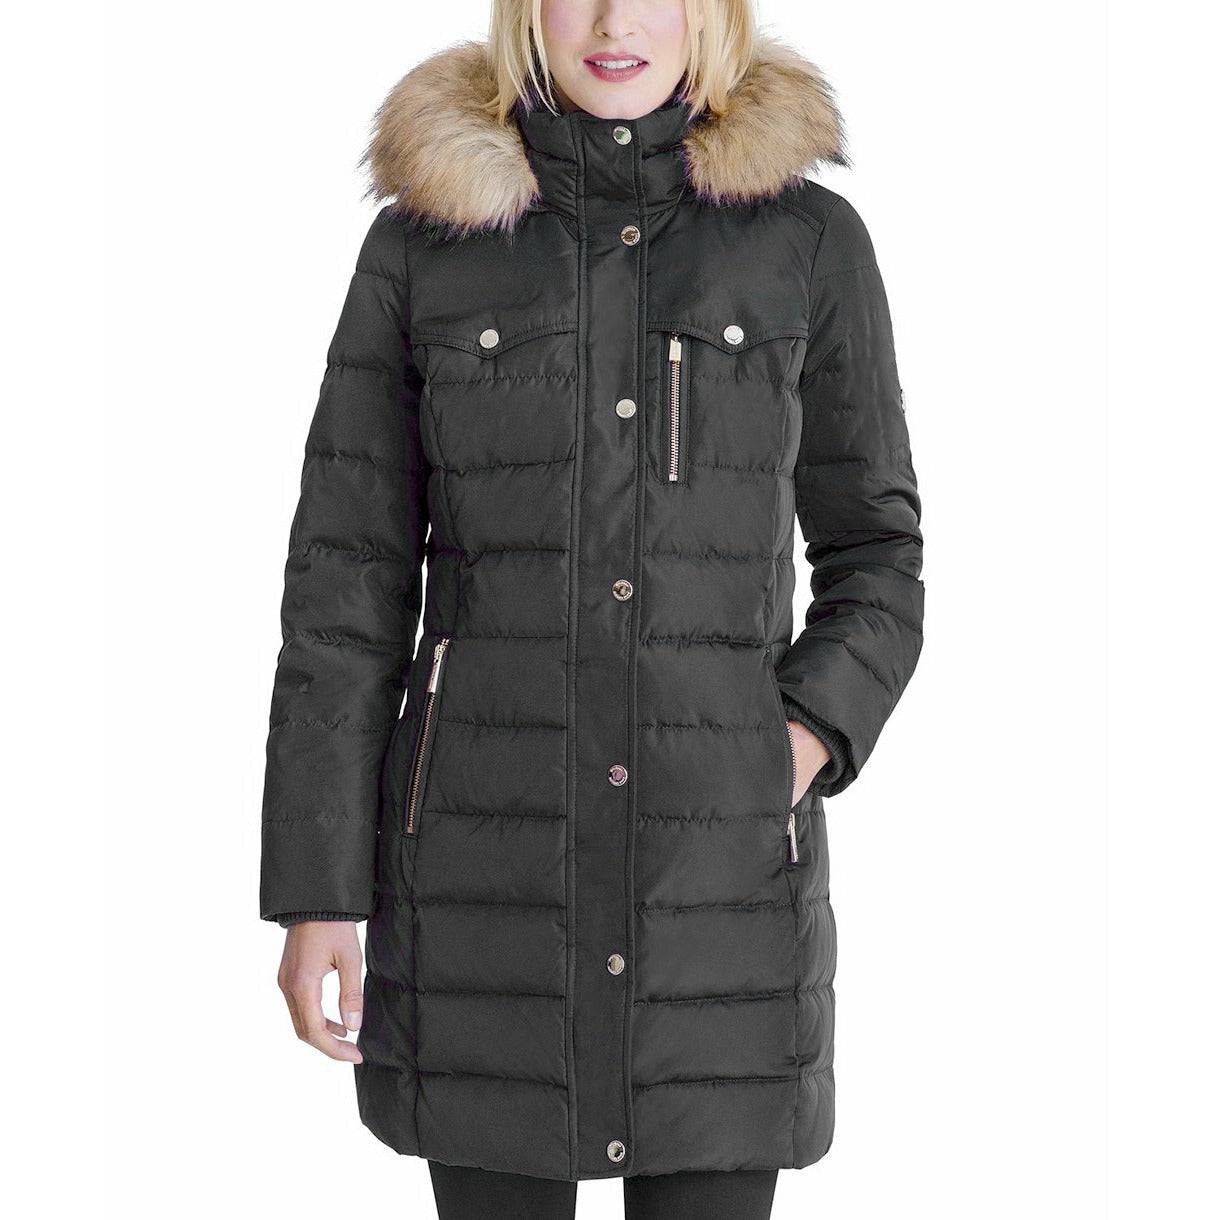 Michael Kors Women's Puffer Down Winter Coat - Zooloo Leather